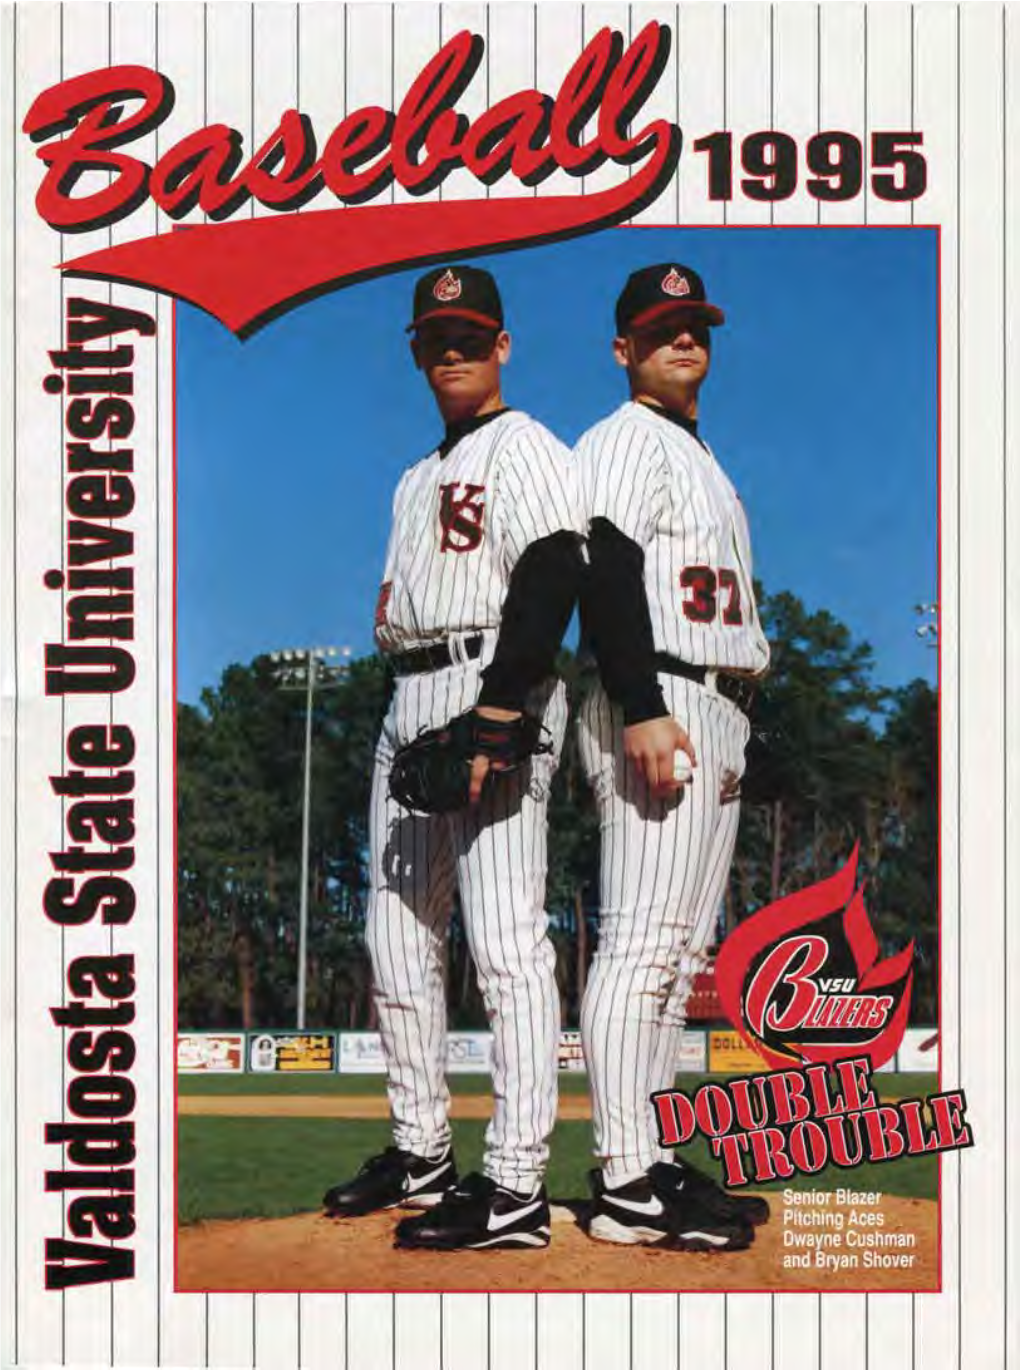 Valdosta State Baseball, 1995. Program